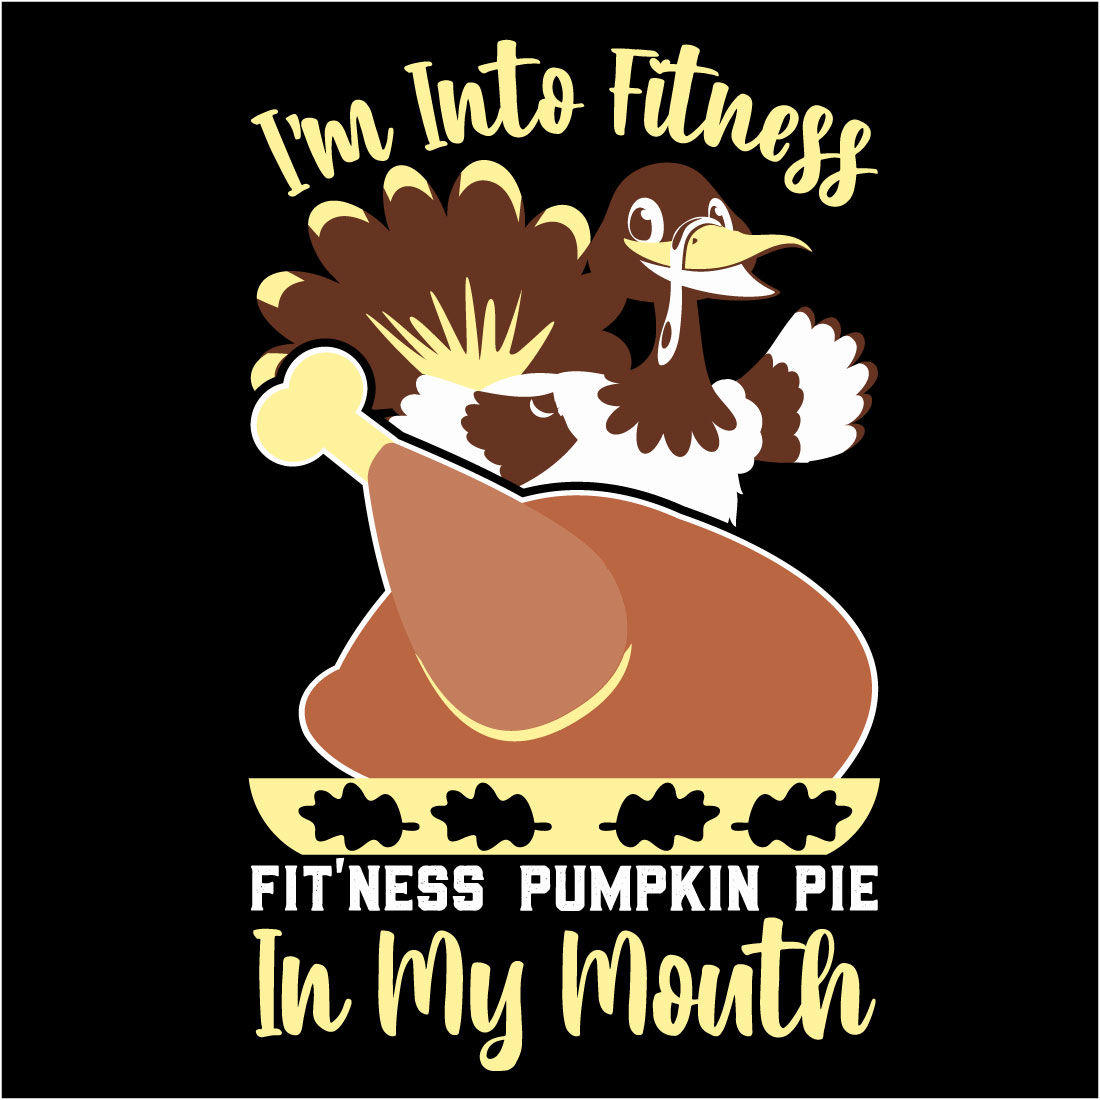 thanksgiving tshirt design i put a turkey in that oven thanksgiving tshirt design 77